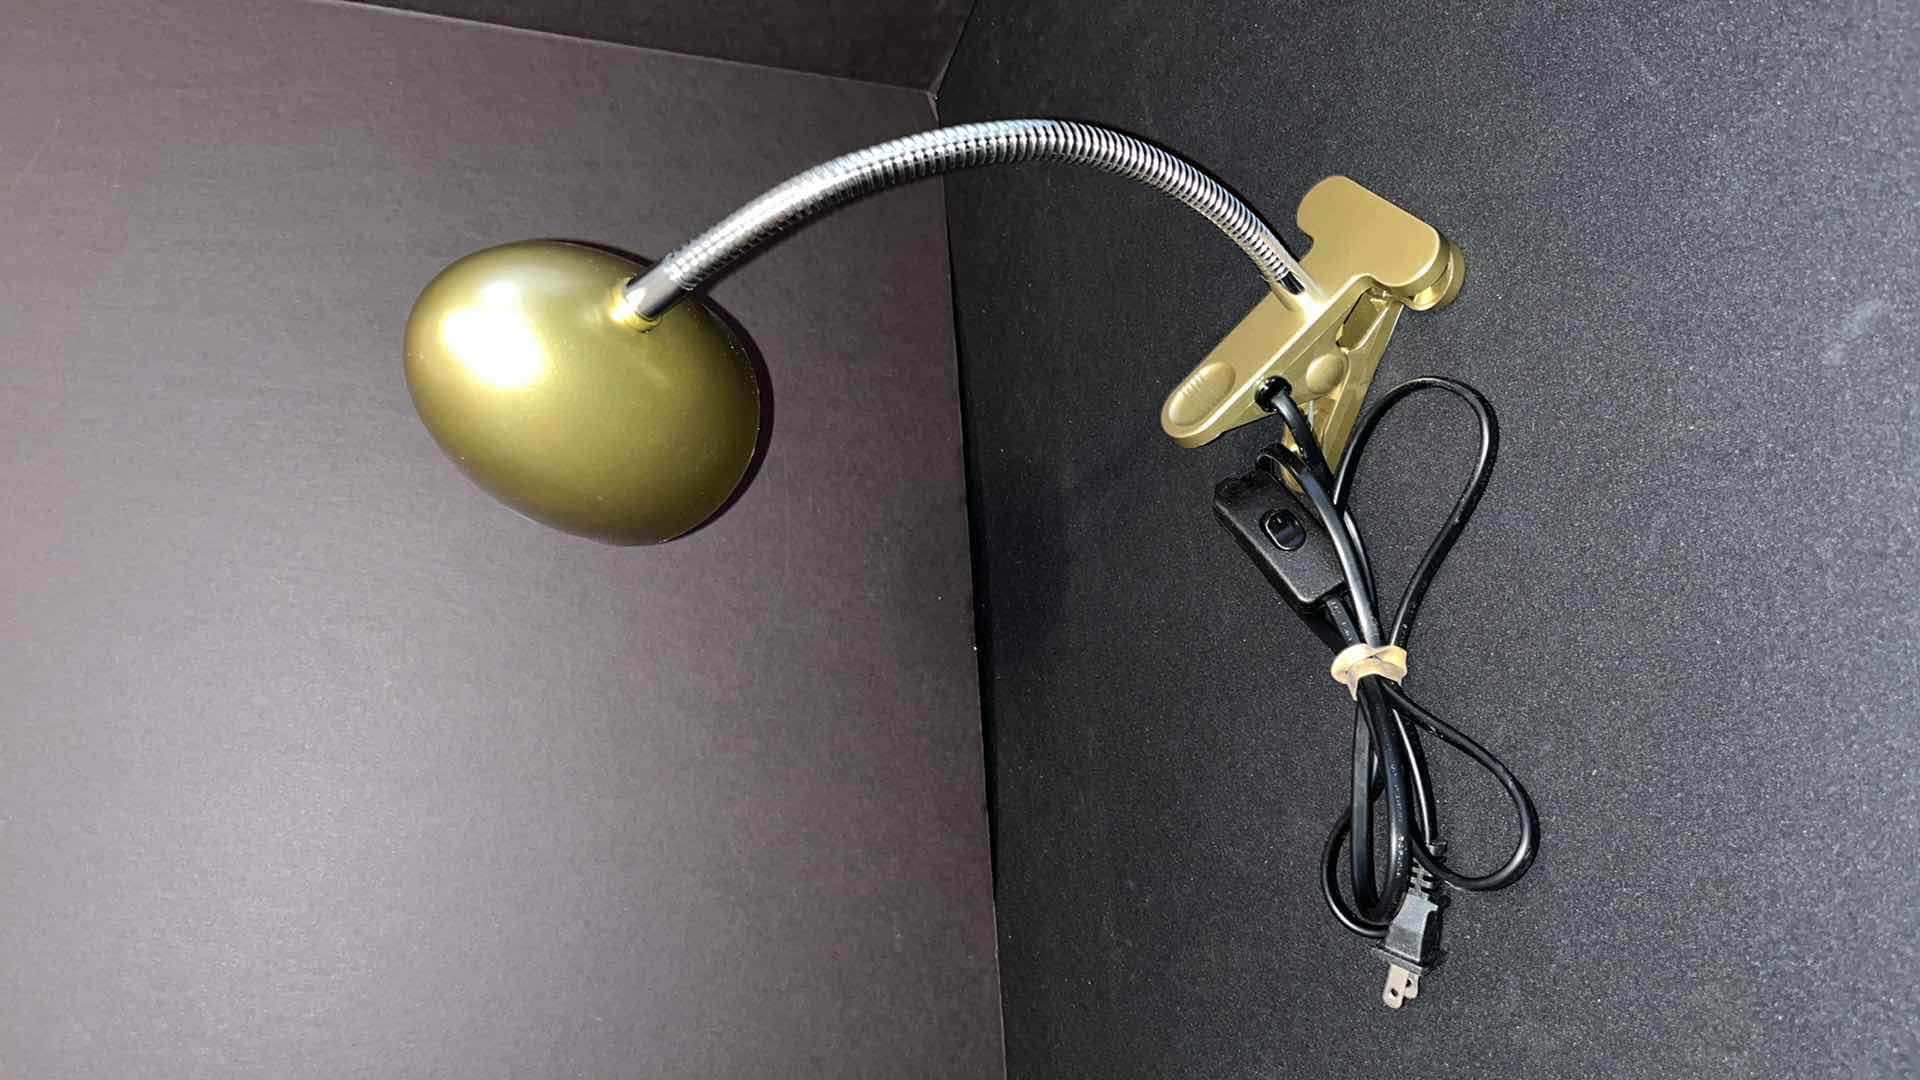 Photo 7 of HONEYWELL 8.5” CIRCULAR FAN (HT-900), INTERTEK BRONZE CLIP-ON DESK LAMP & SHARP DIGITAL ALARM CLOCK